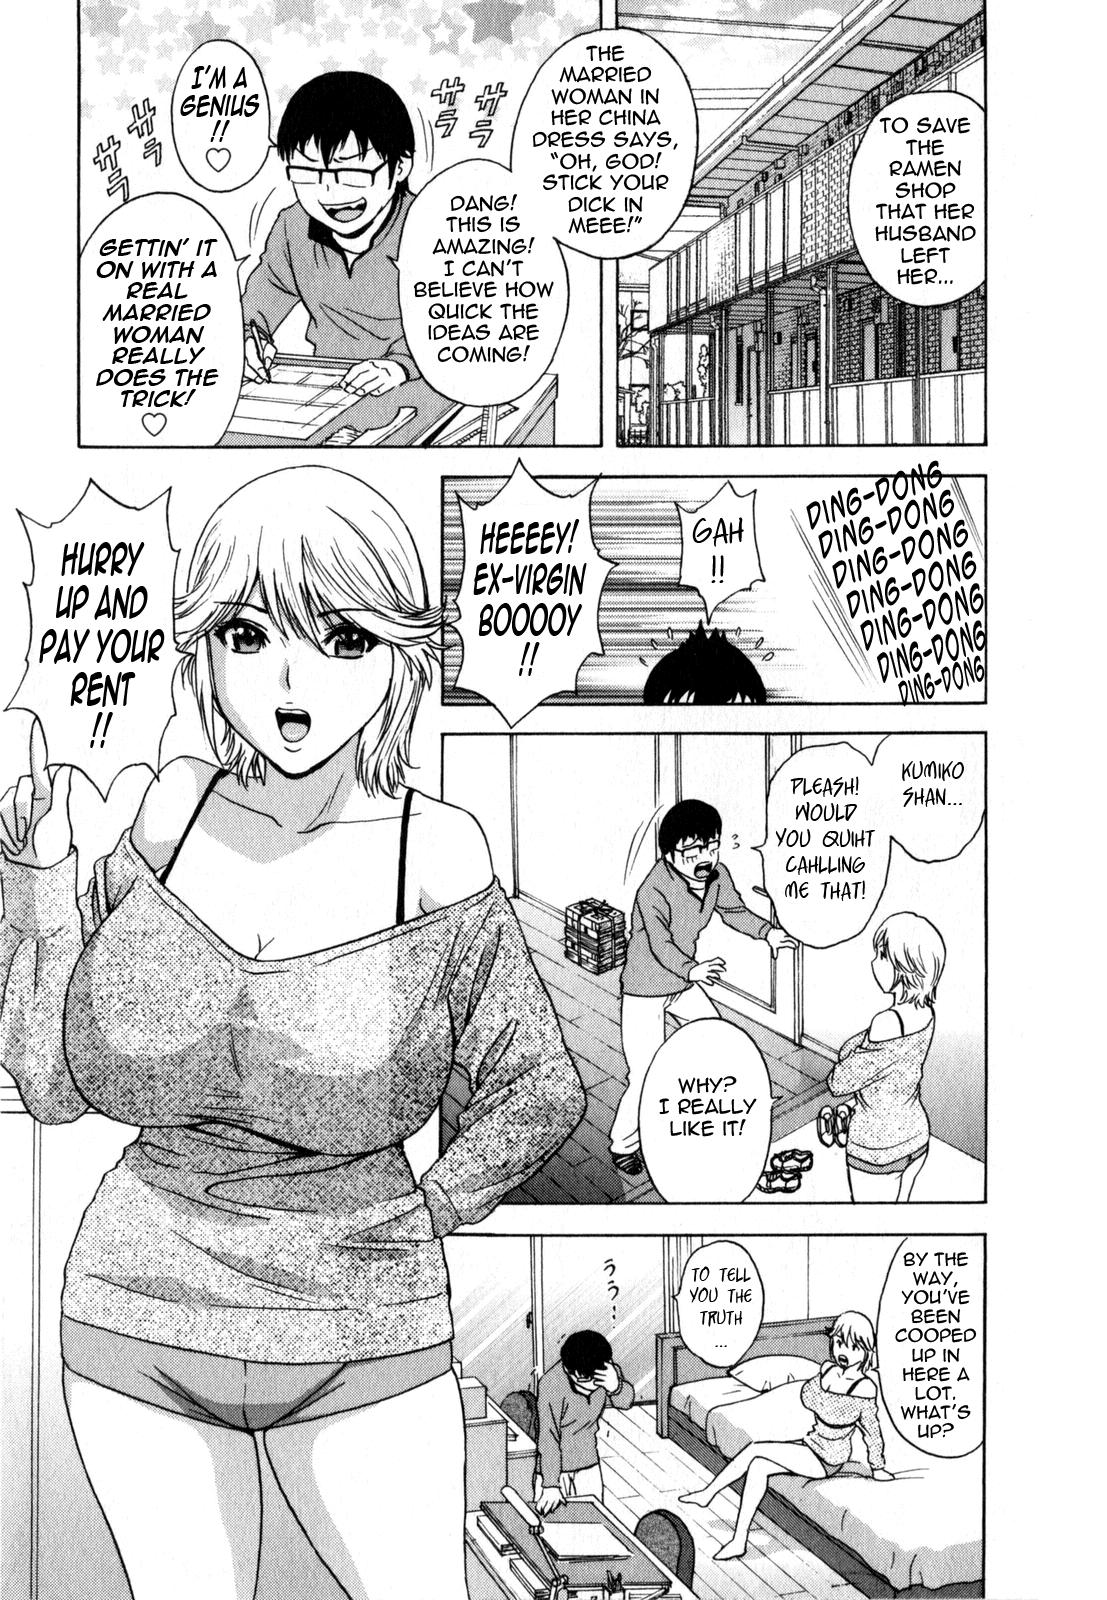 [Hidemaru] Life with Married Women Just Like a Manga 2 - Ch. 1-7 [English] {Tadanohito} 59